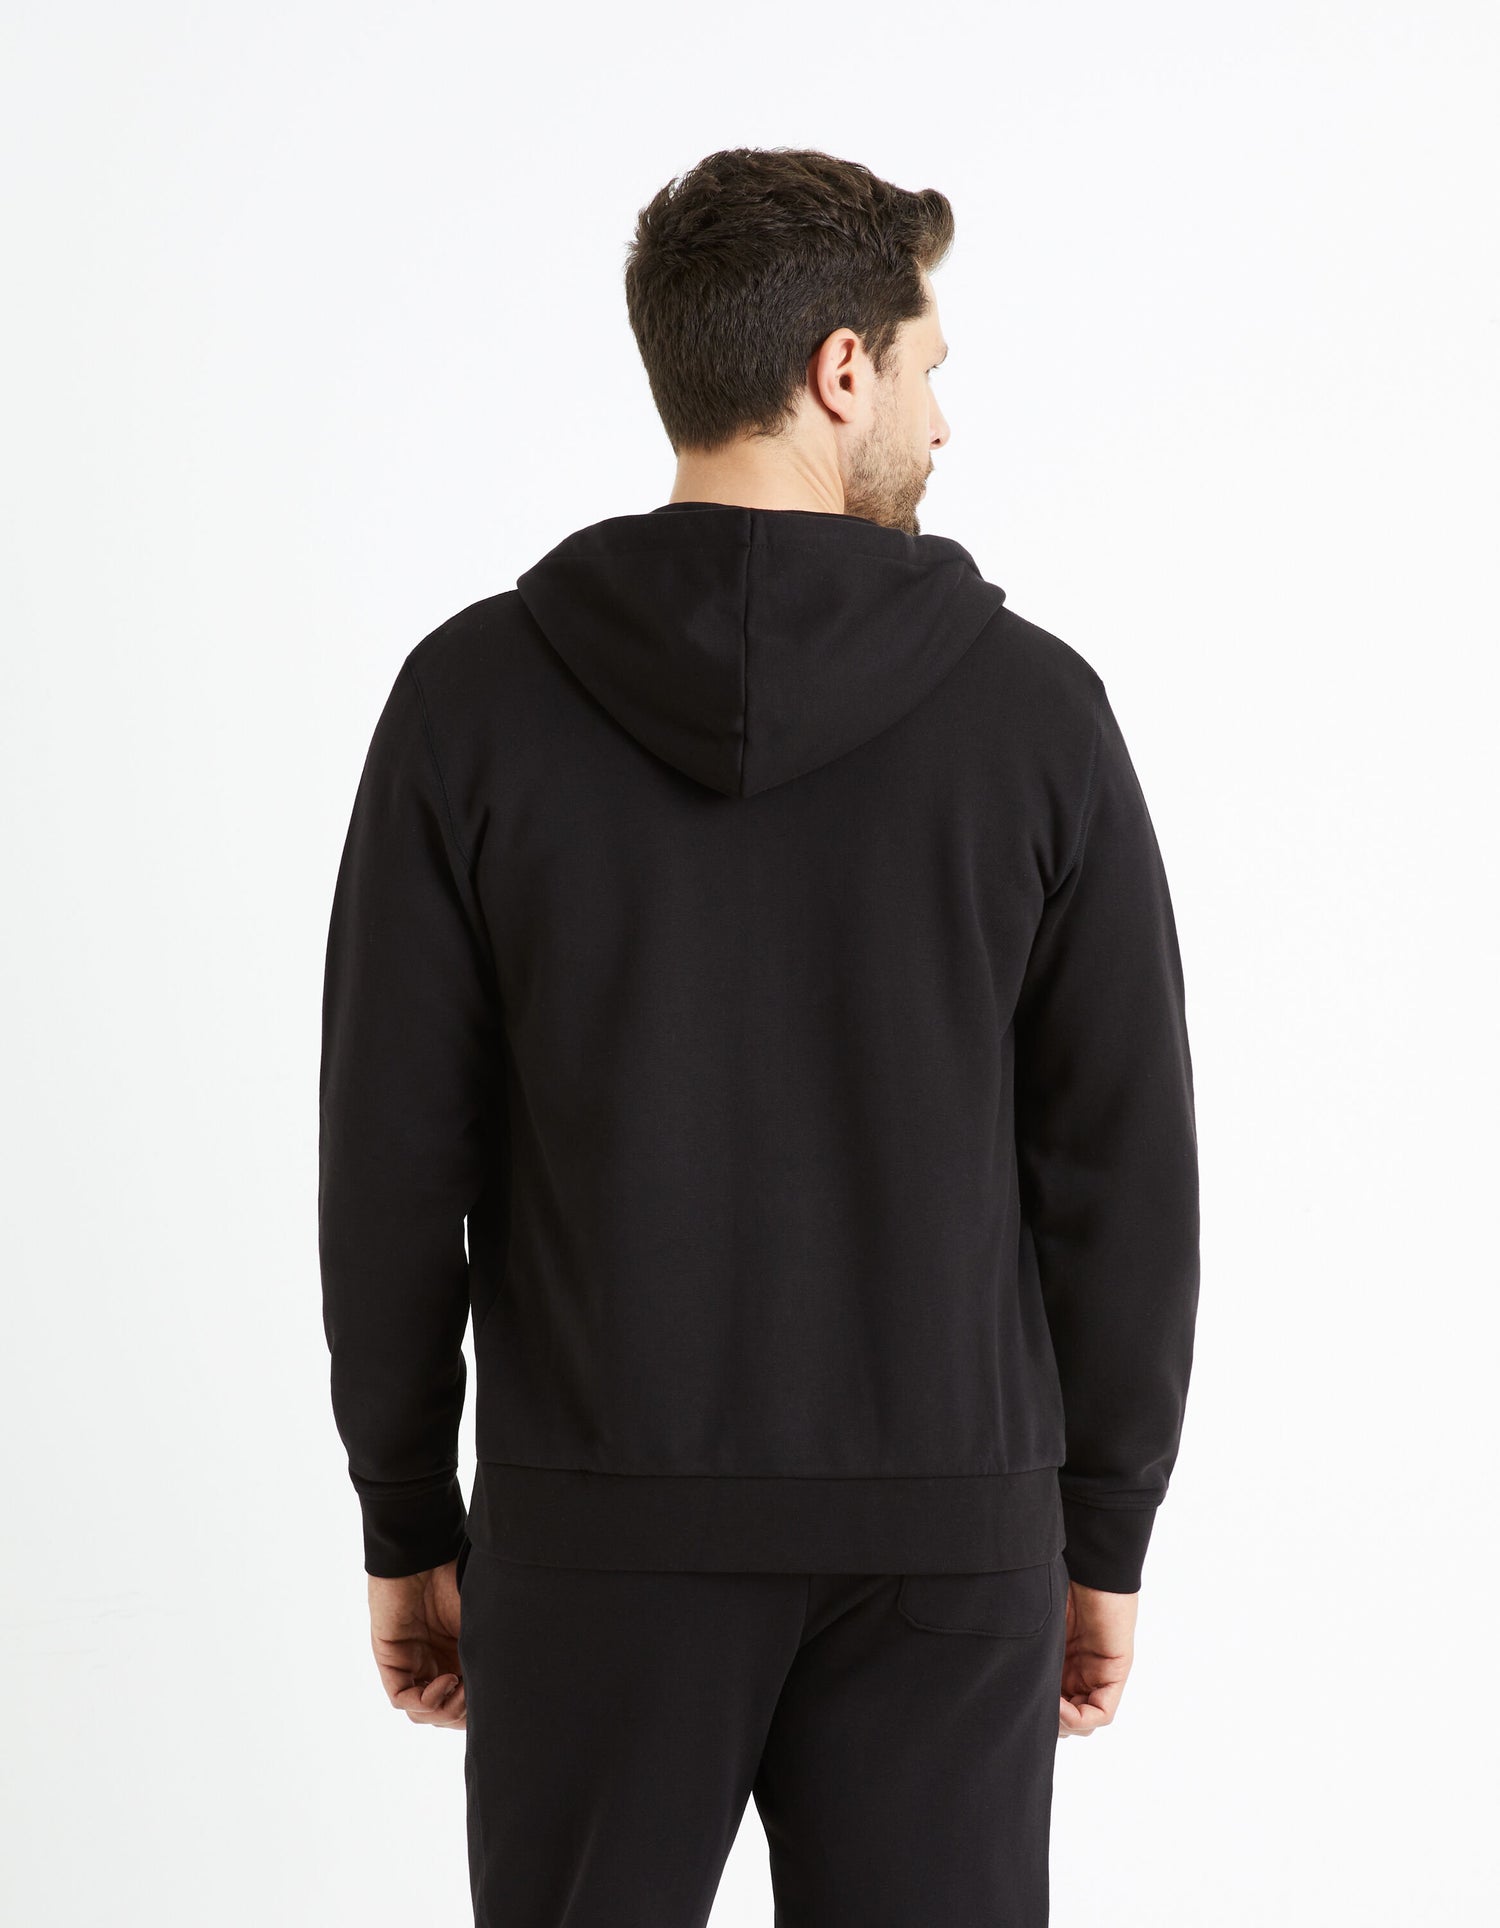 Zipped Hooded Sweatshirt 100% Cotton_FETHREE_BLACK_04